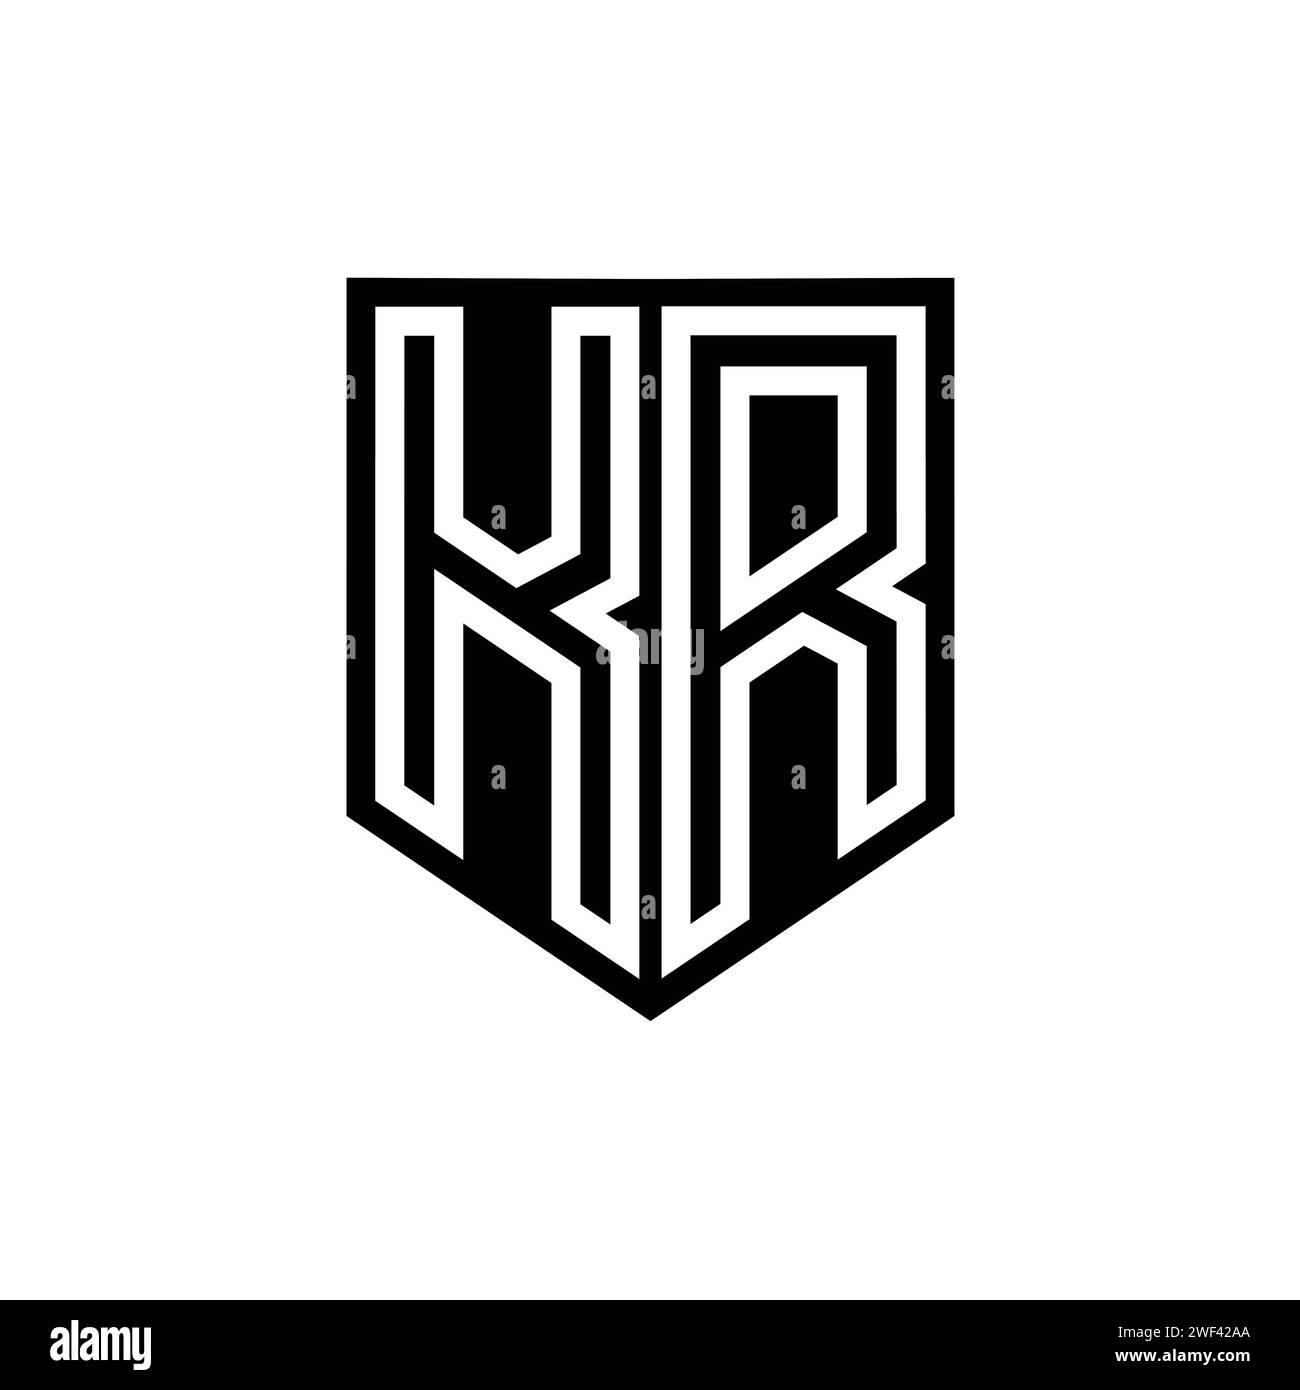 KR Letter Logo monogram shield geometric line inside shield style design template Stock Photo